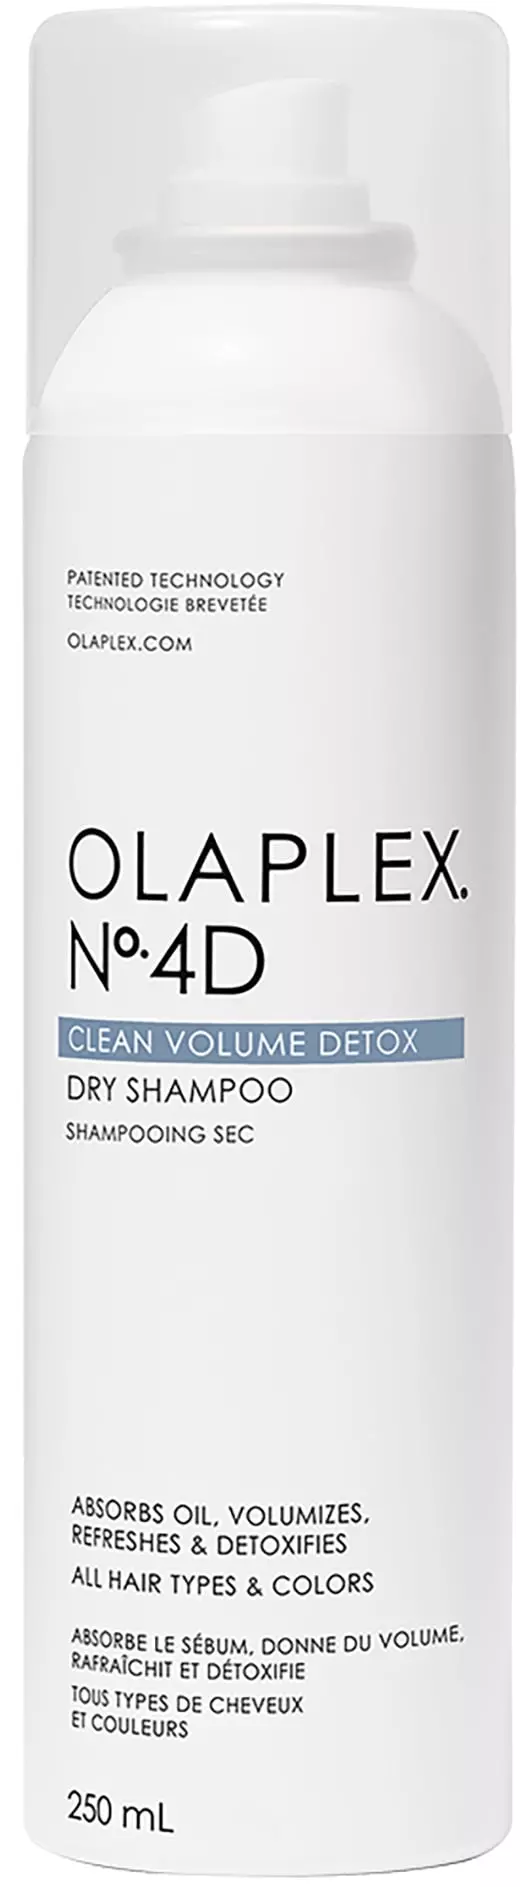 Olaplex No.4D Clean Volume Detox Dry